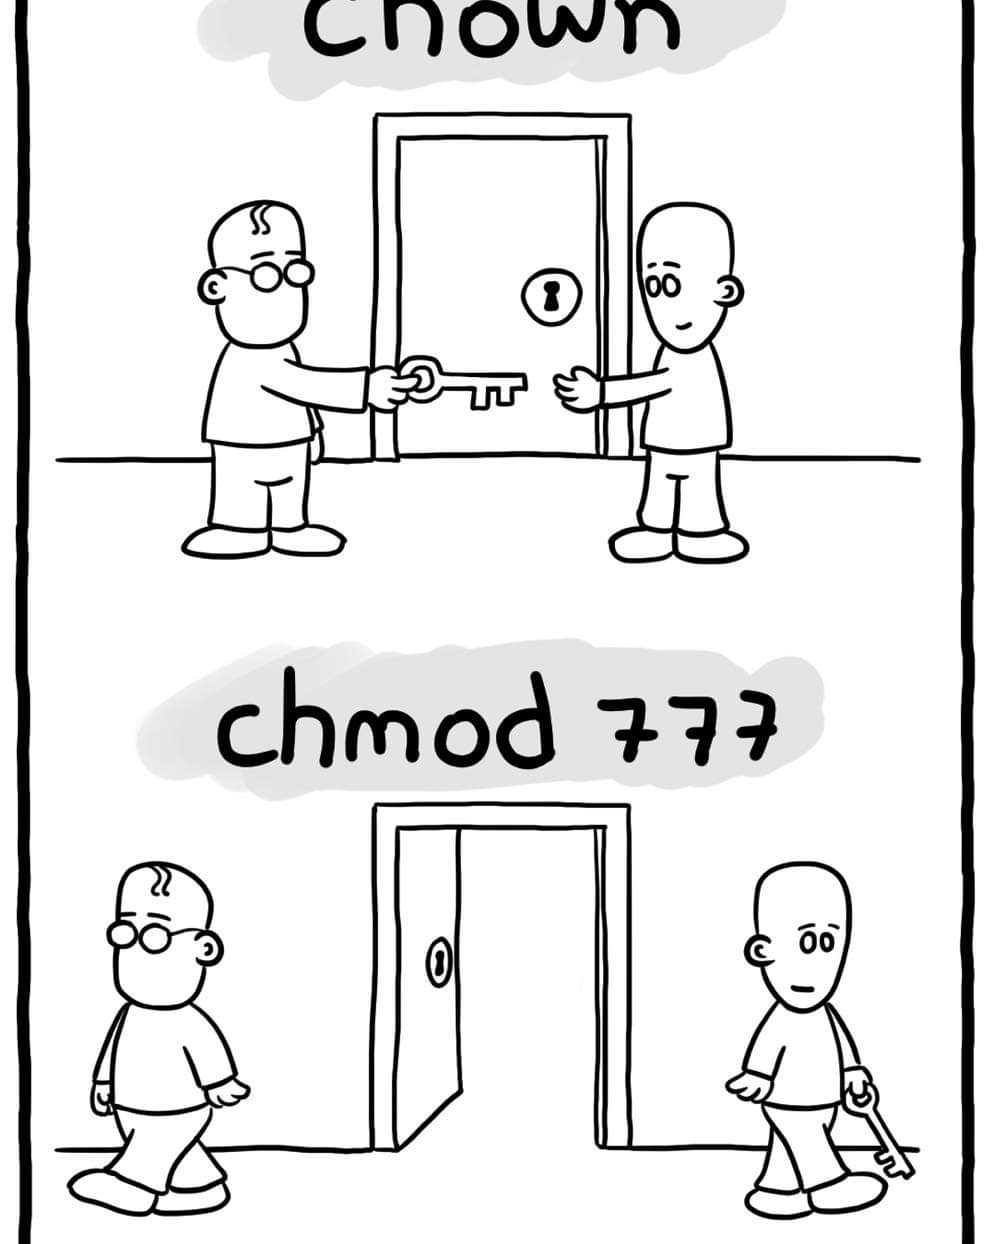 chown_vs_chmod_777.jpg